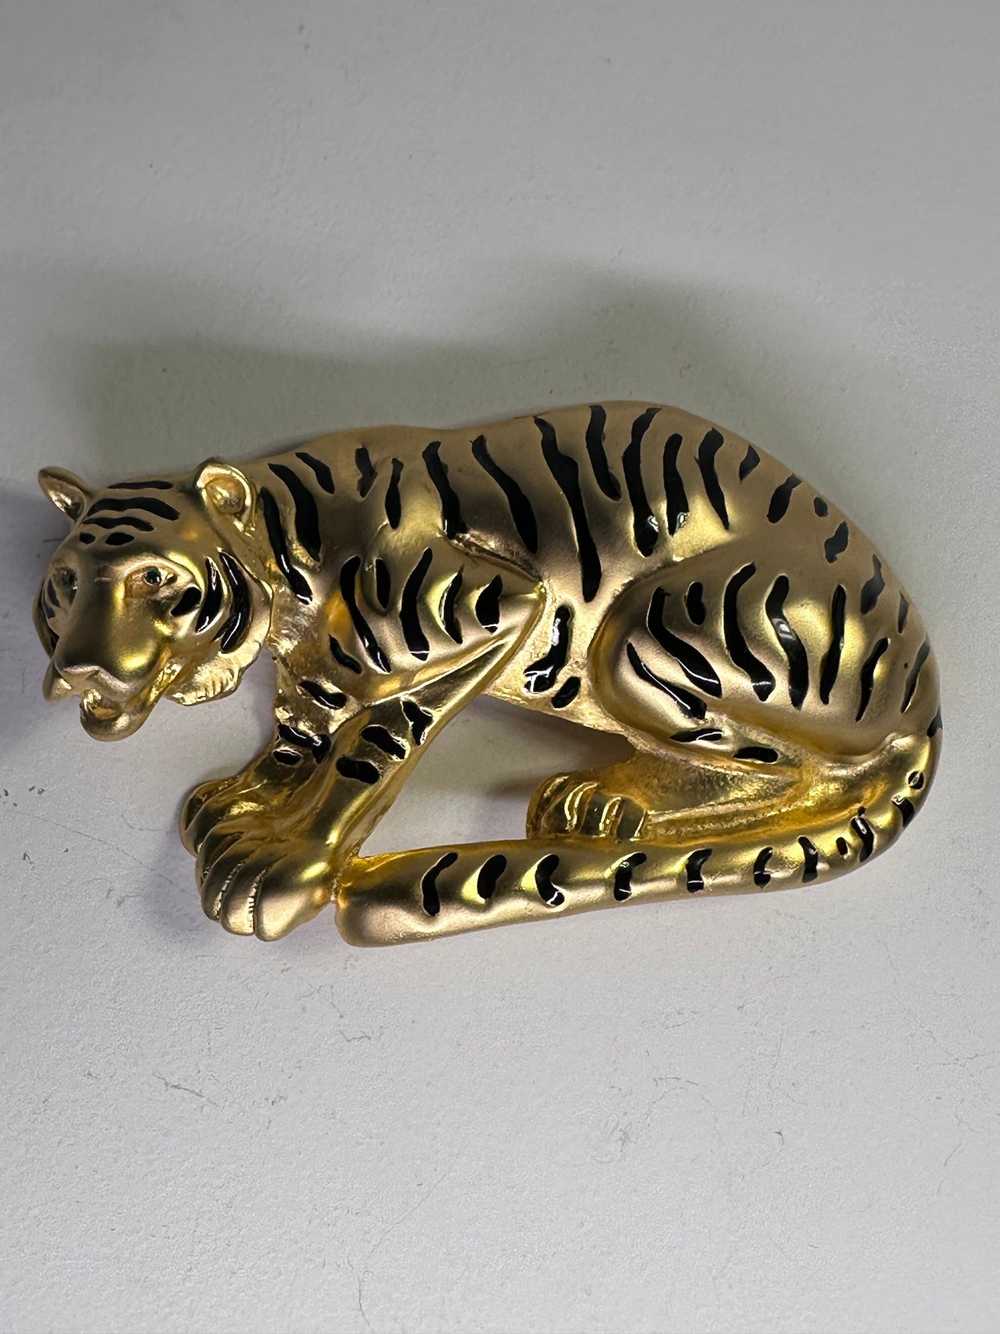 1980s Massive Gold Tiger Brooch - image 2